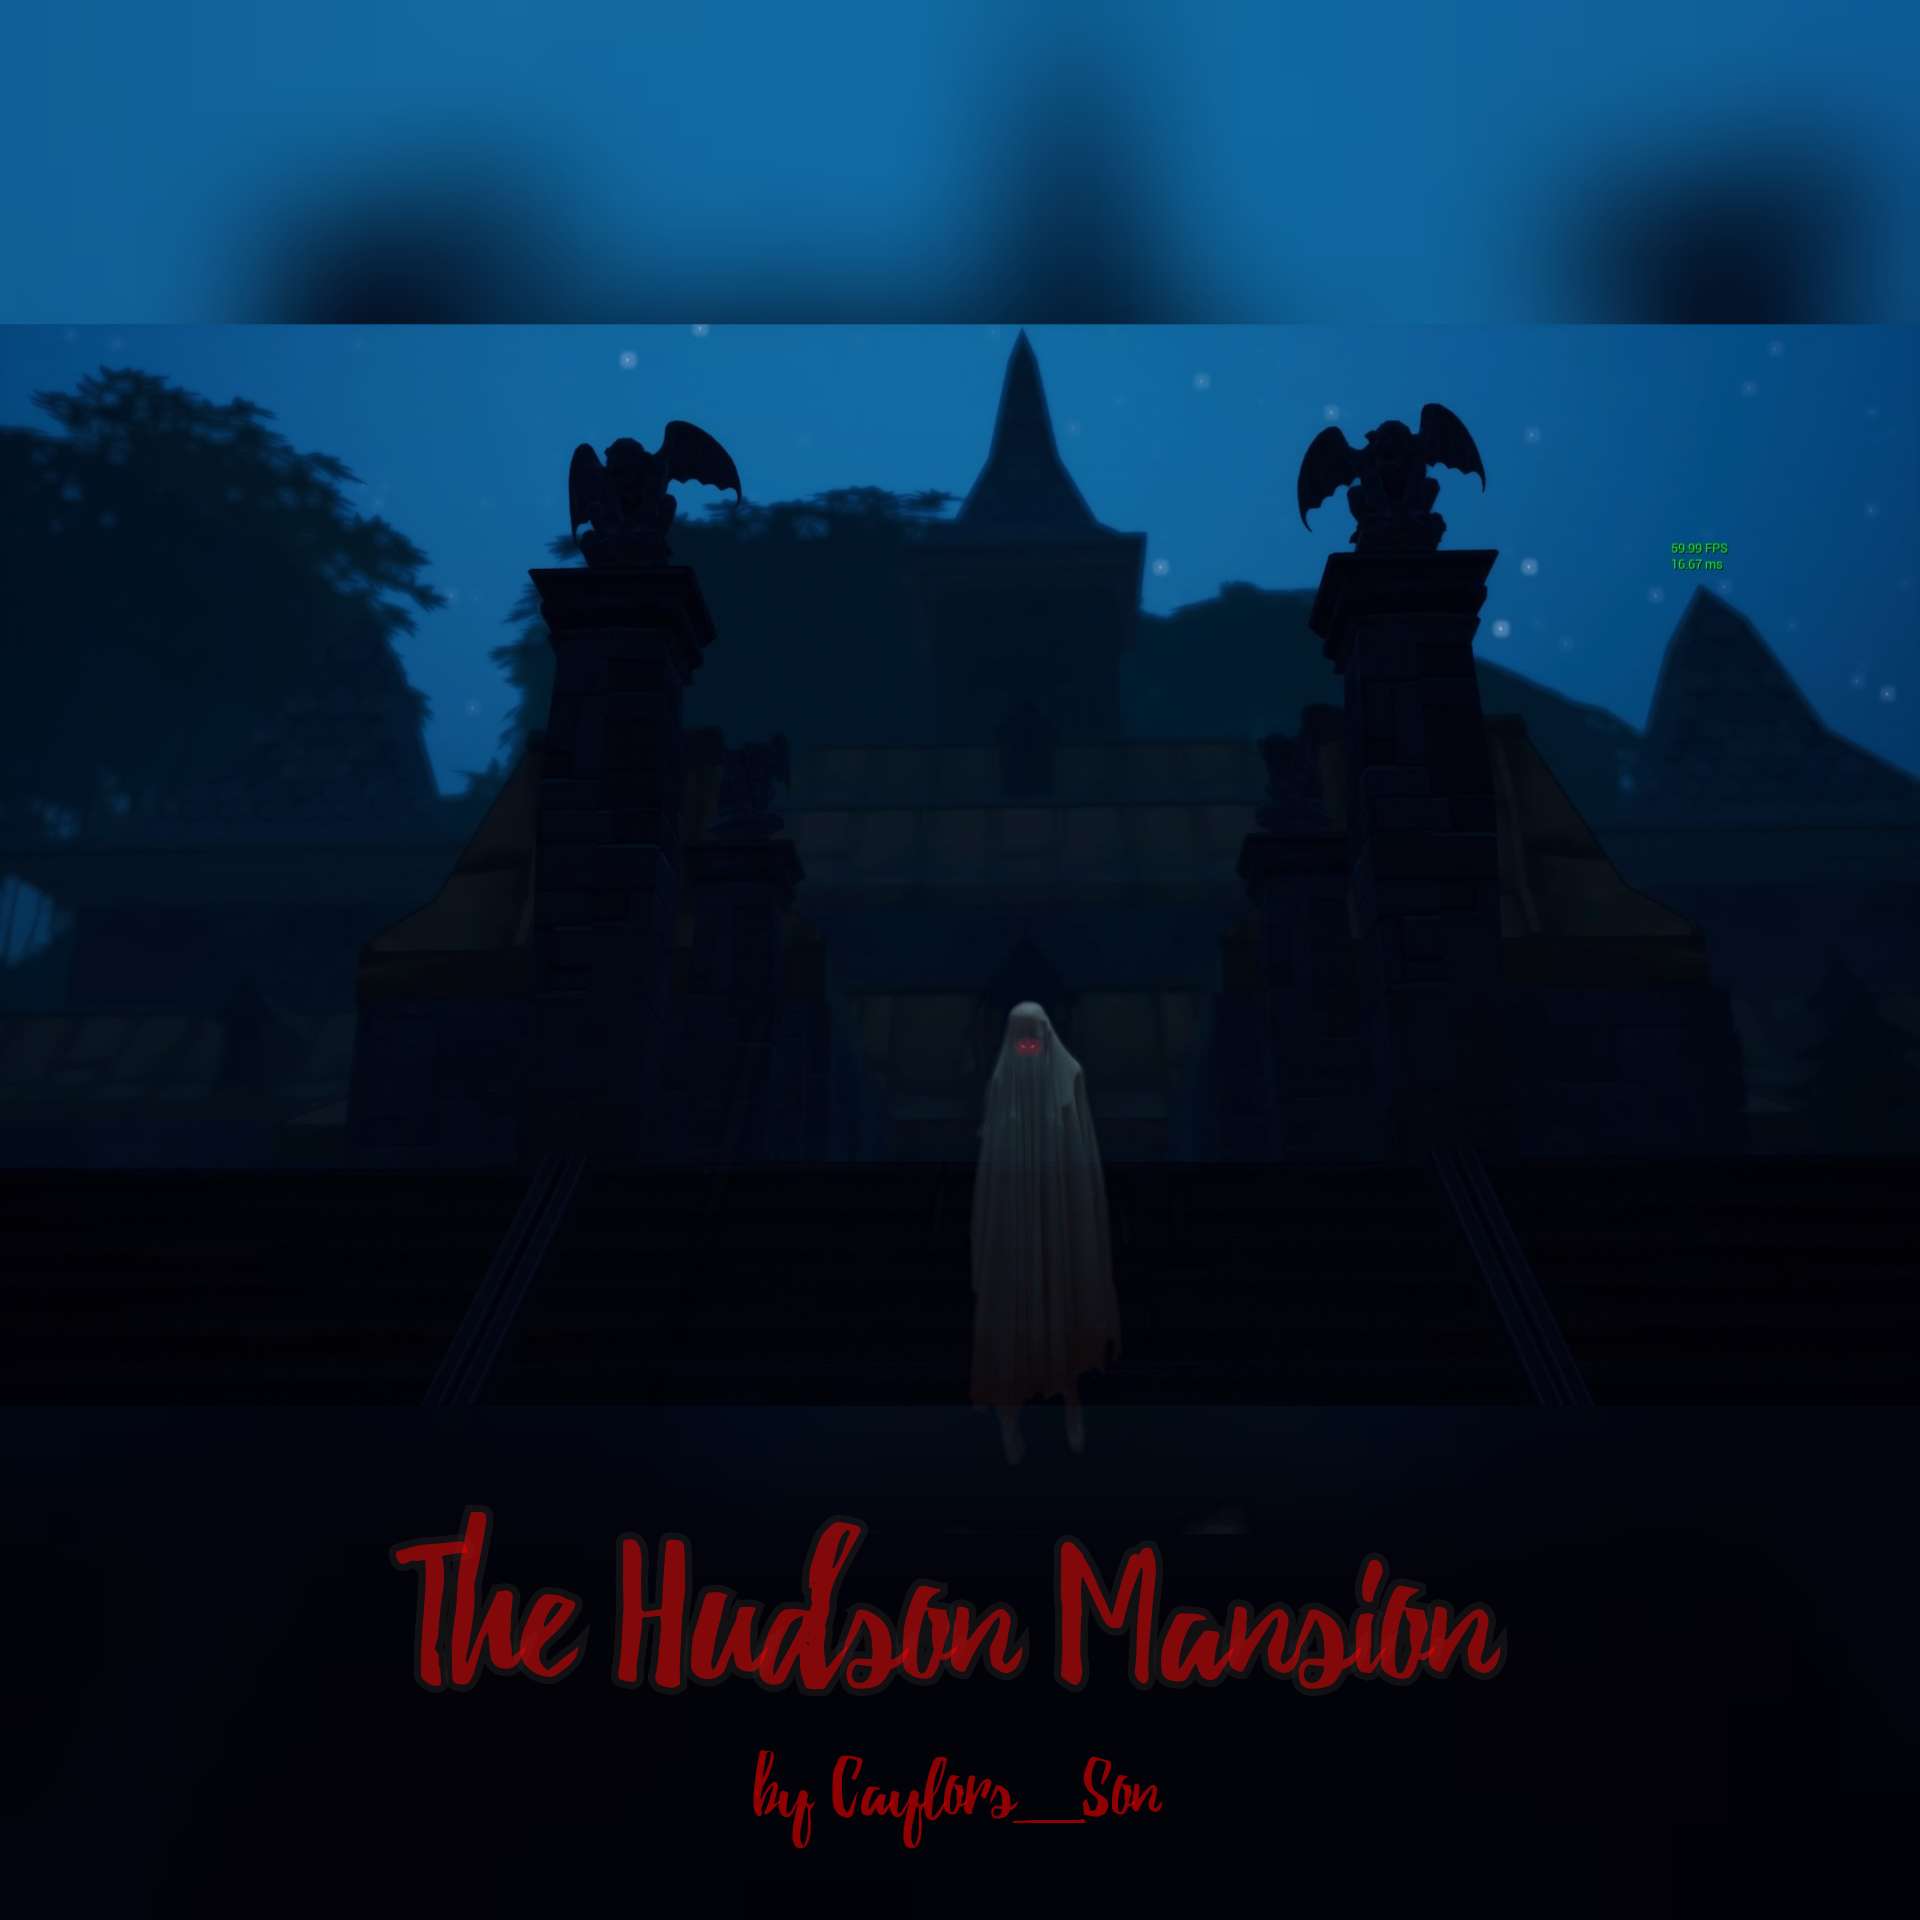 THE HUDSON MANSION